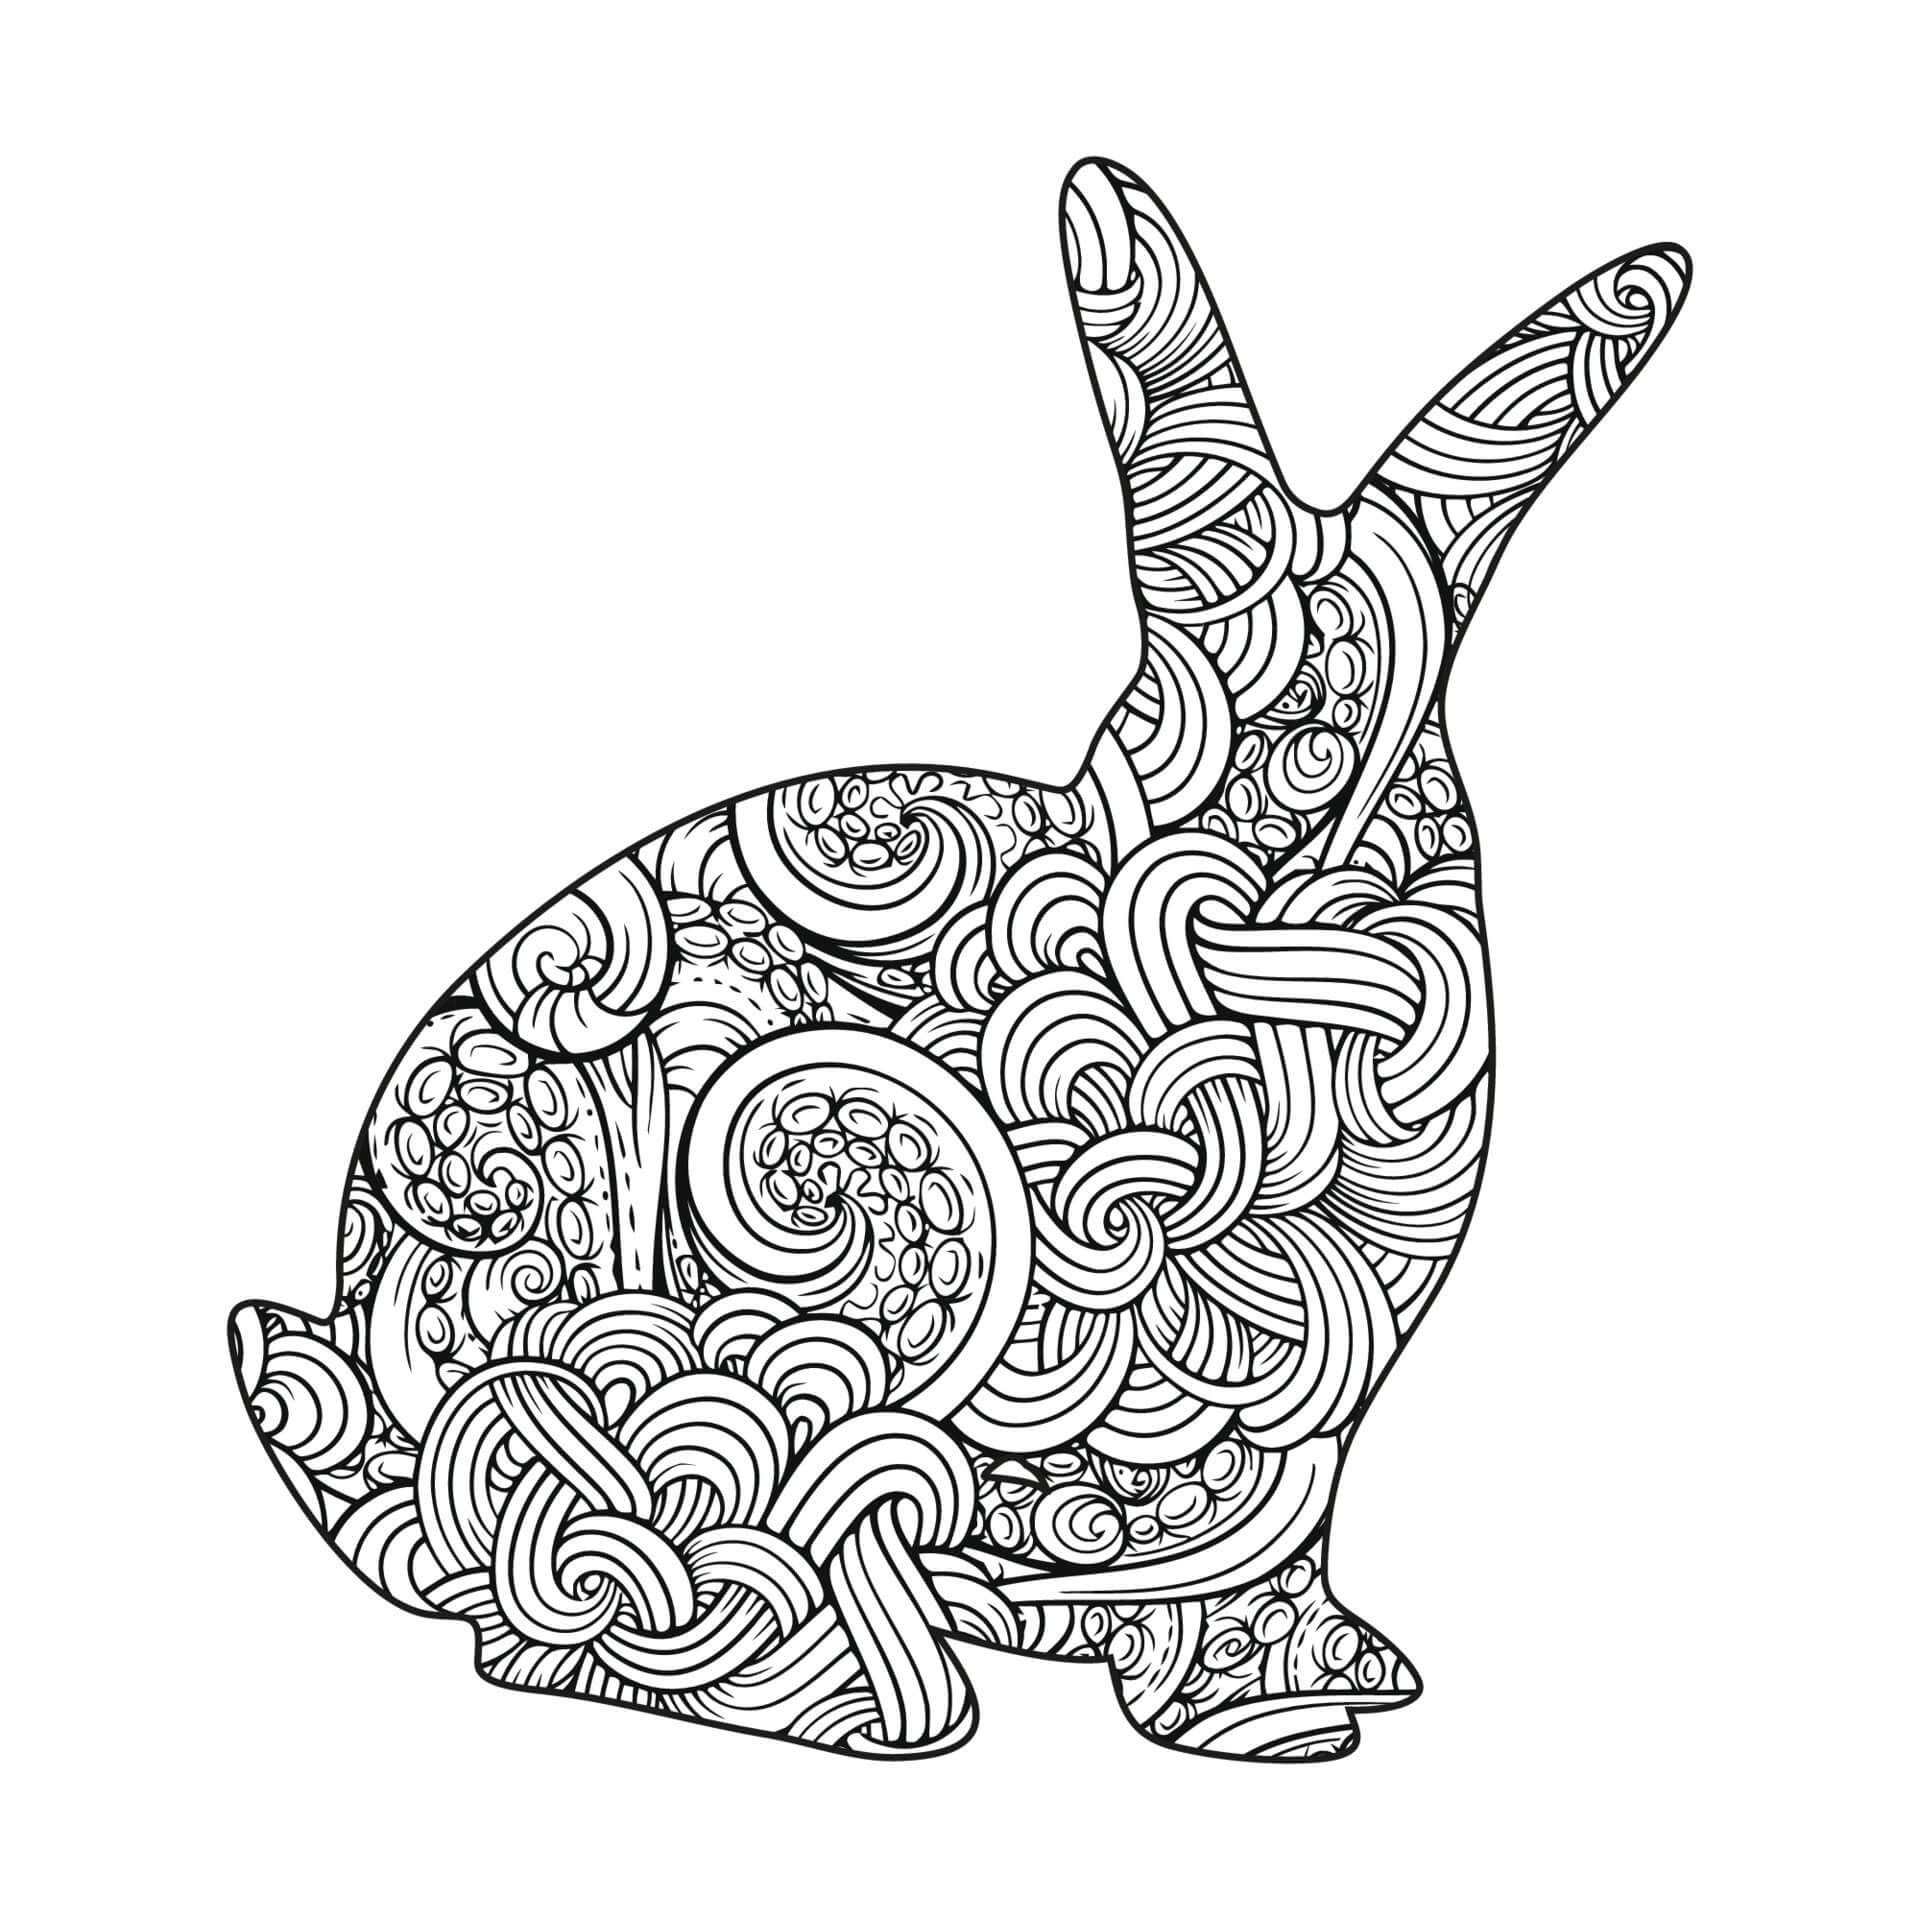 Mandala Rabbit Coloring Page - Sheet 5 Mandalas